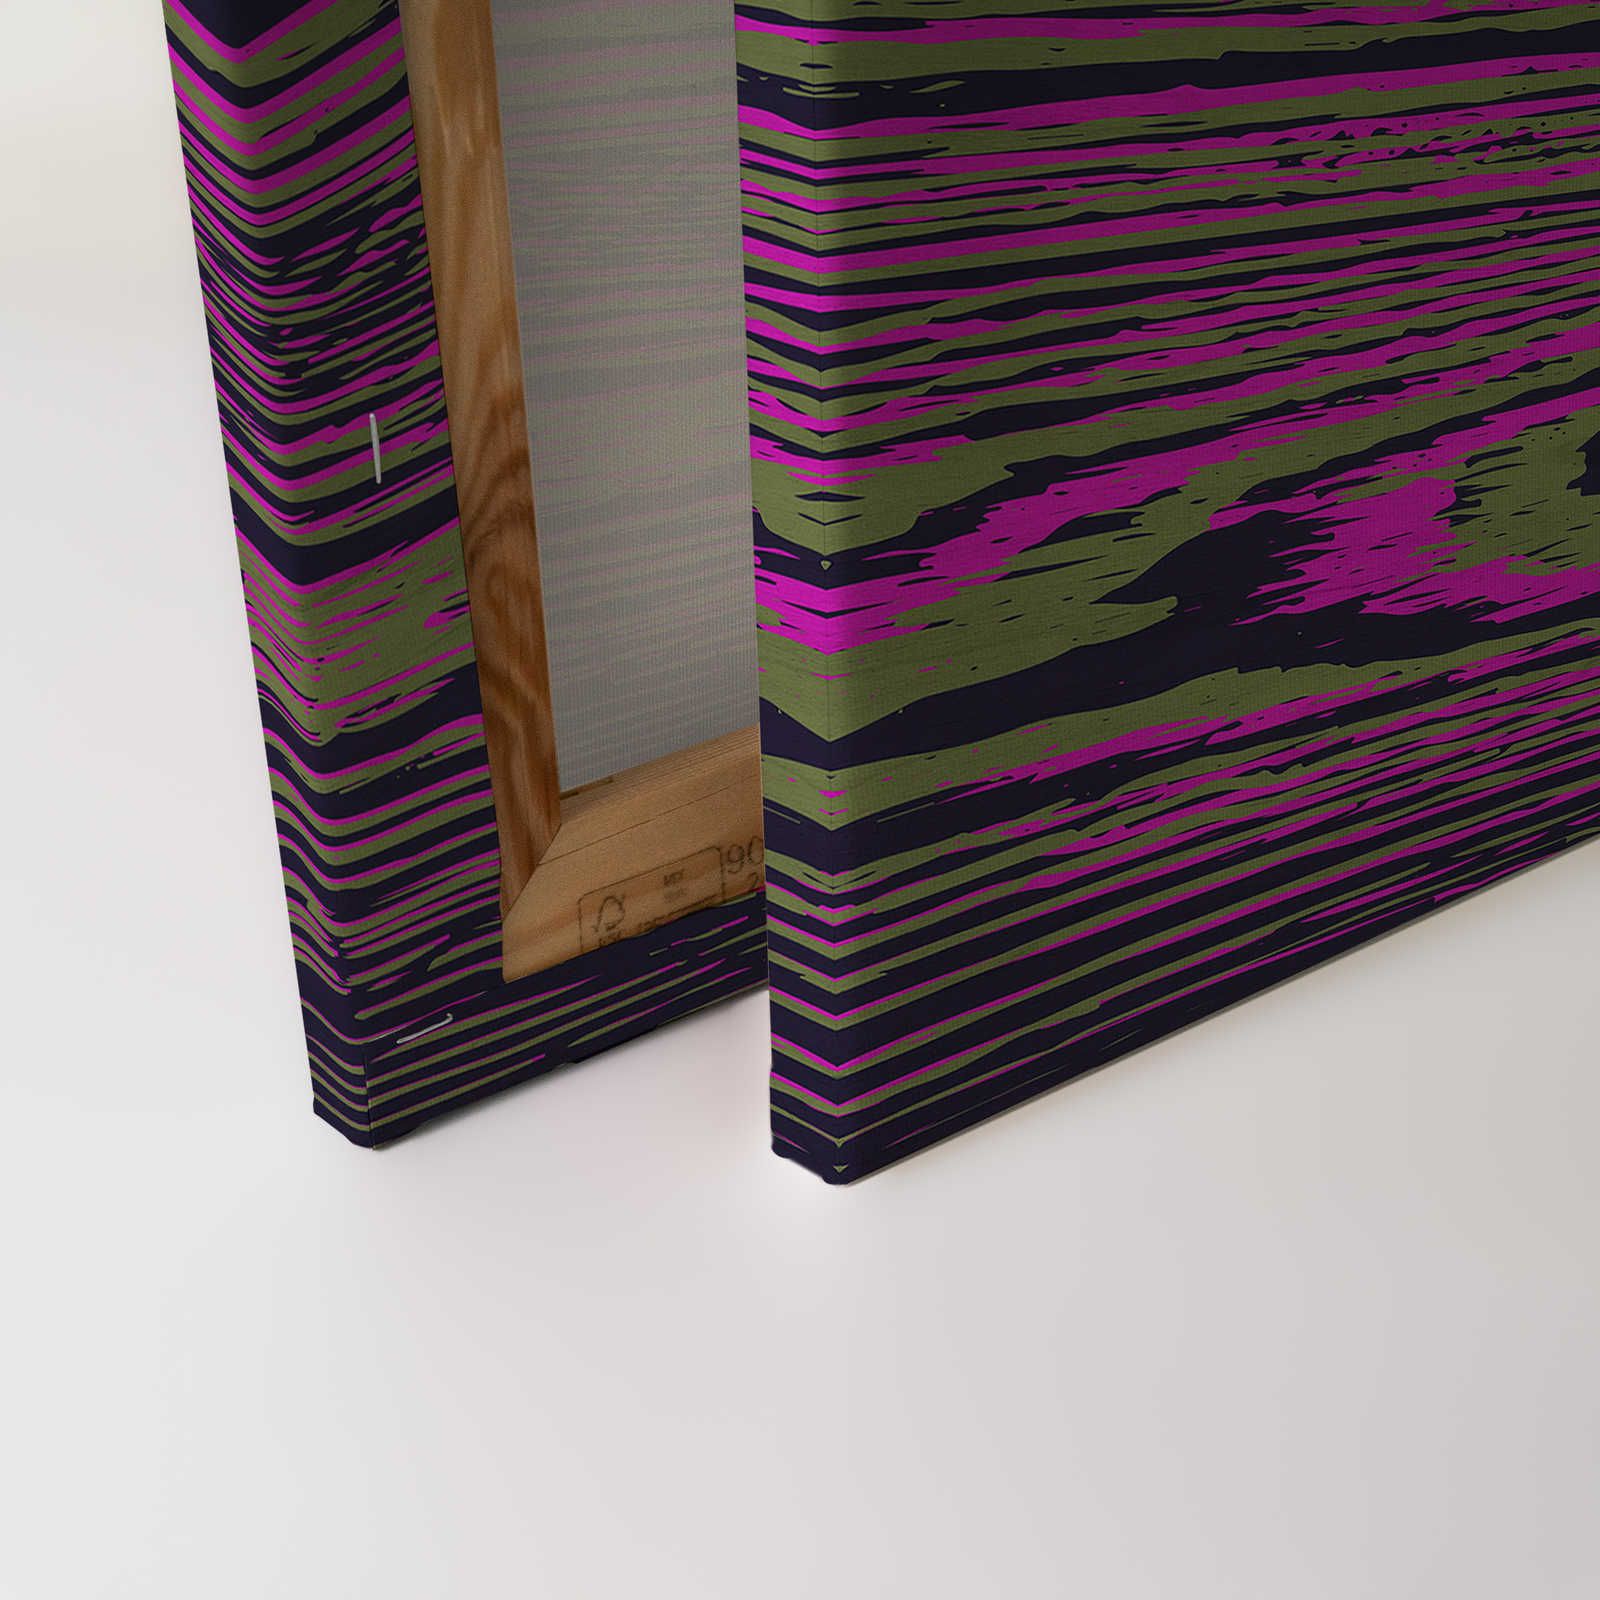             Kontiki 2 - Quadro su tela Neon Wood Grain, Rosa e Nero - 0,90 m x 0,60 m
        